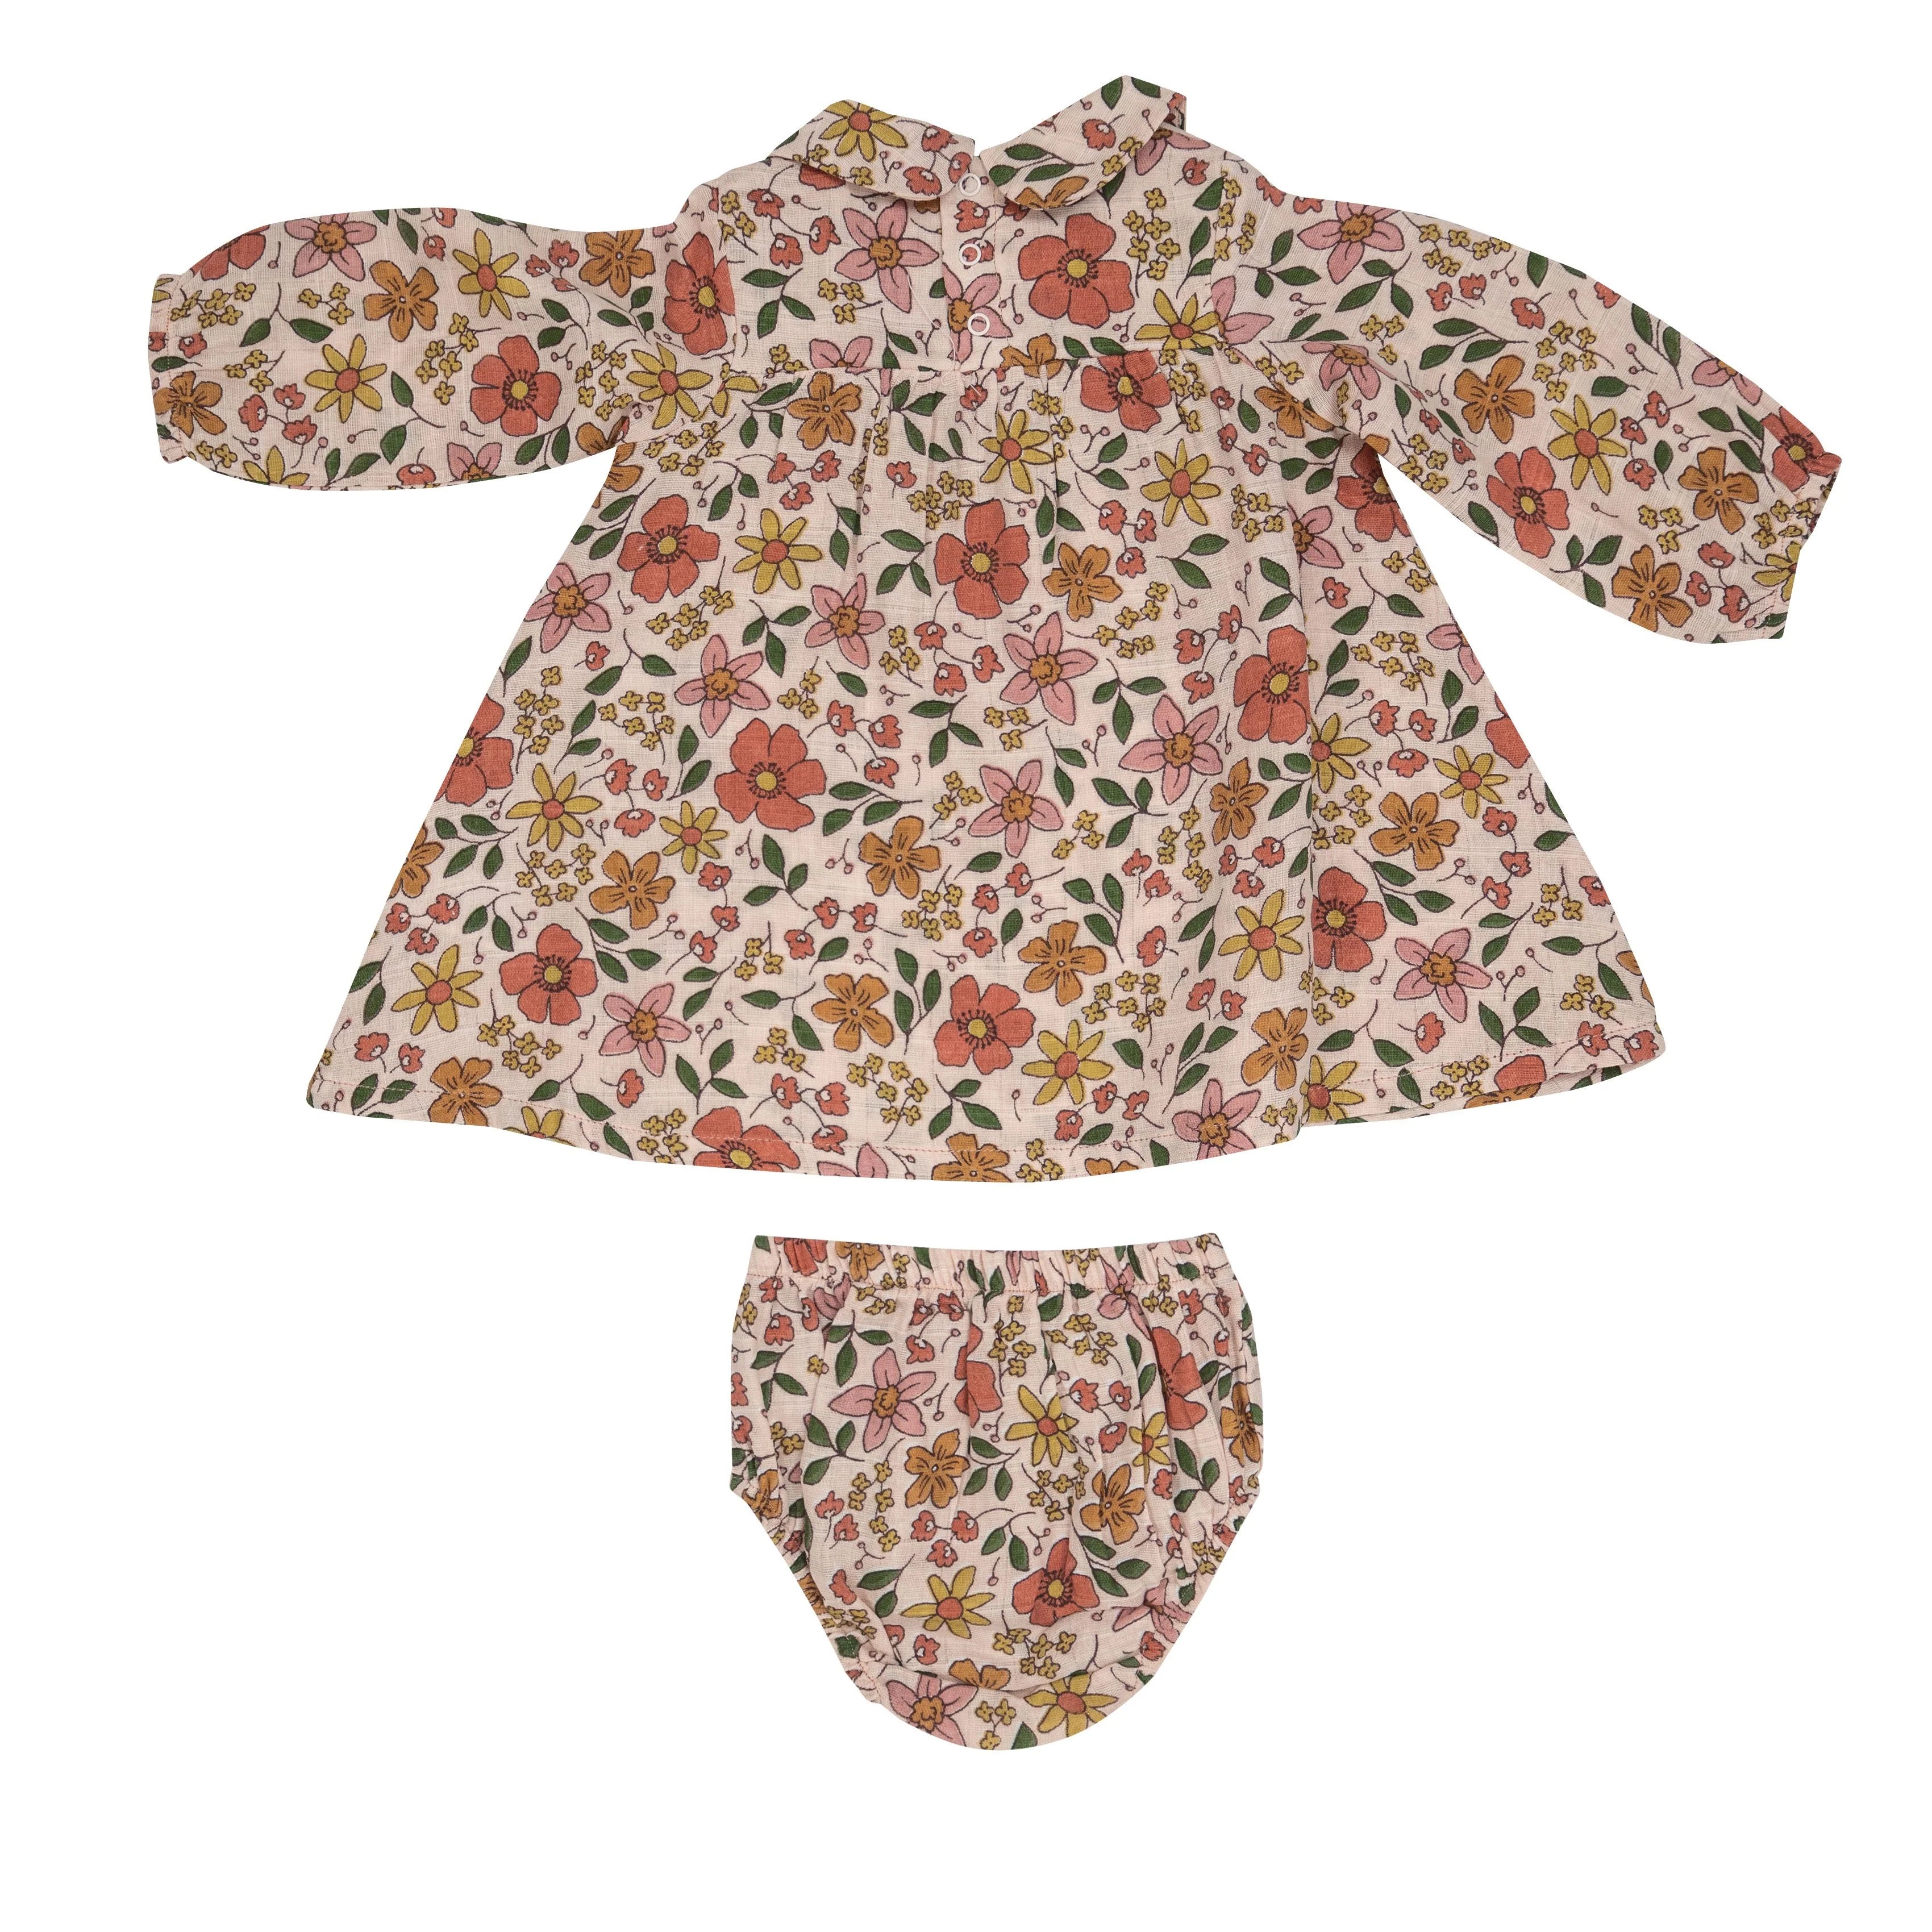 Peter Pan Collar Dress & Diaper Set - Poppies and Starflowers